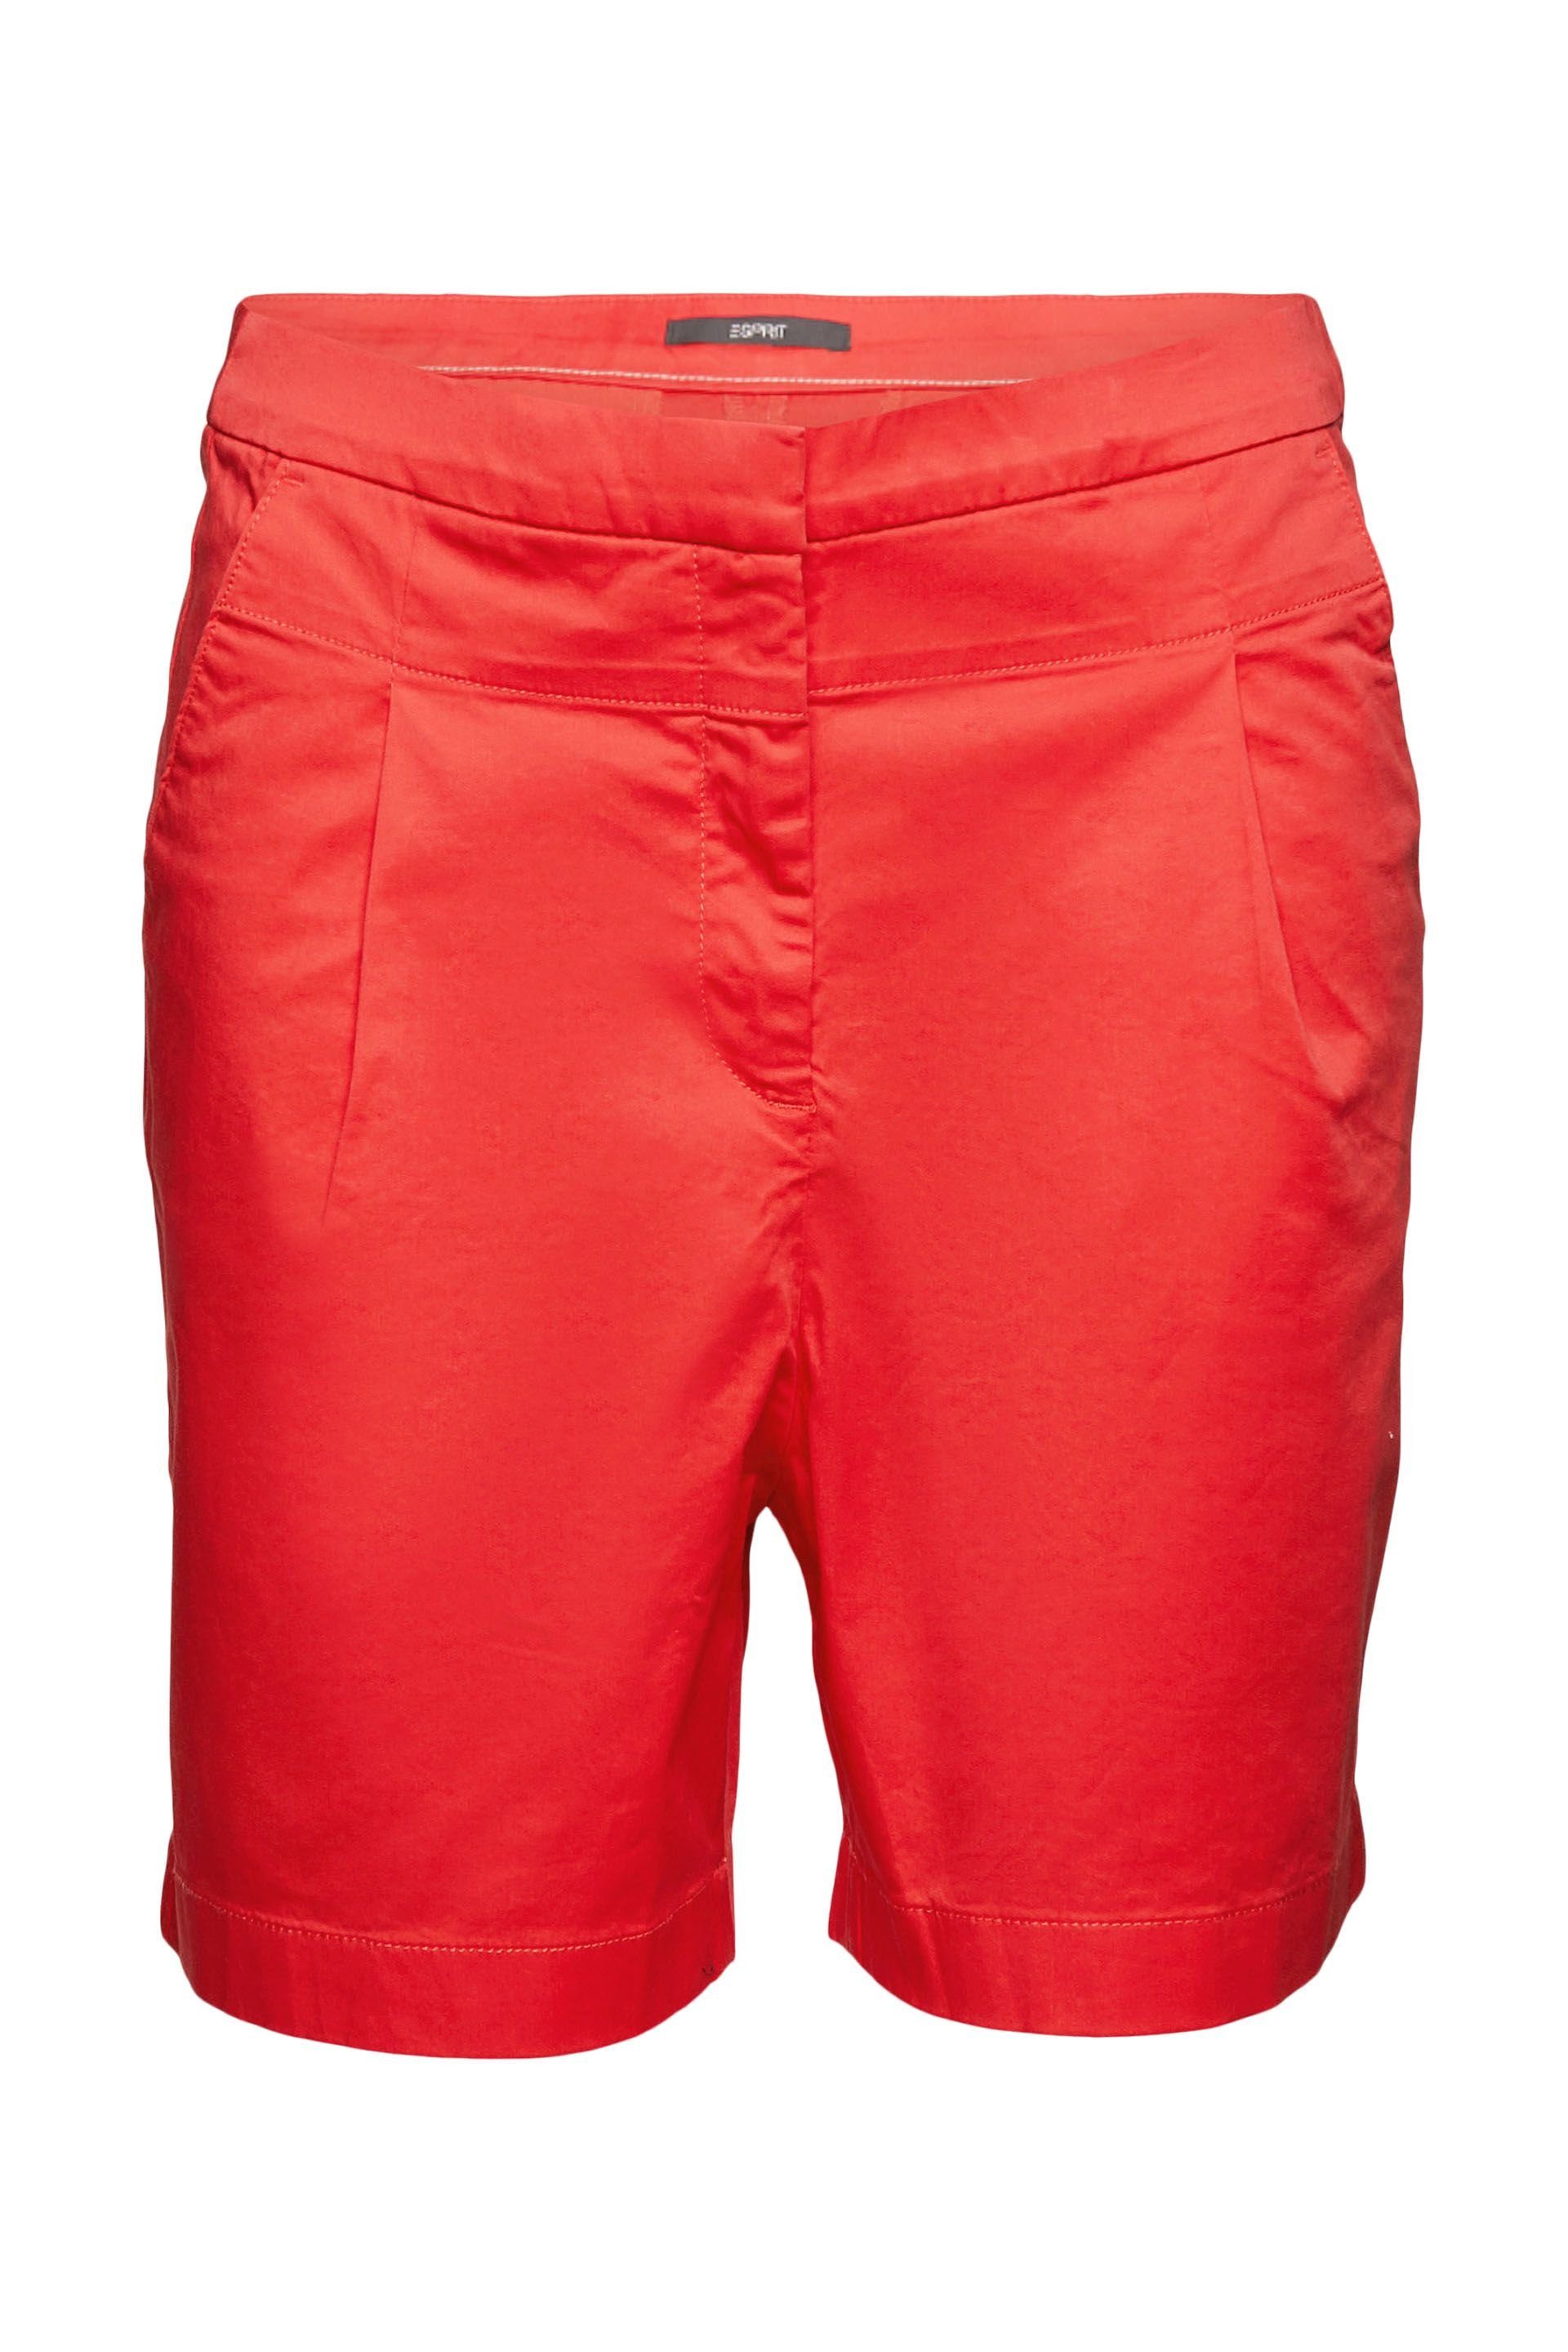 Esprit Shorts Shorts red